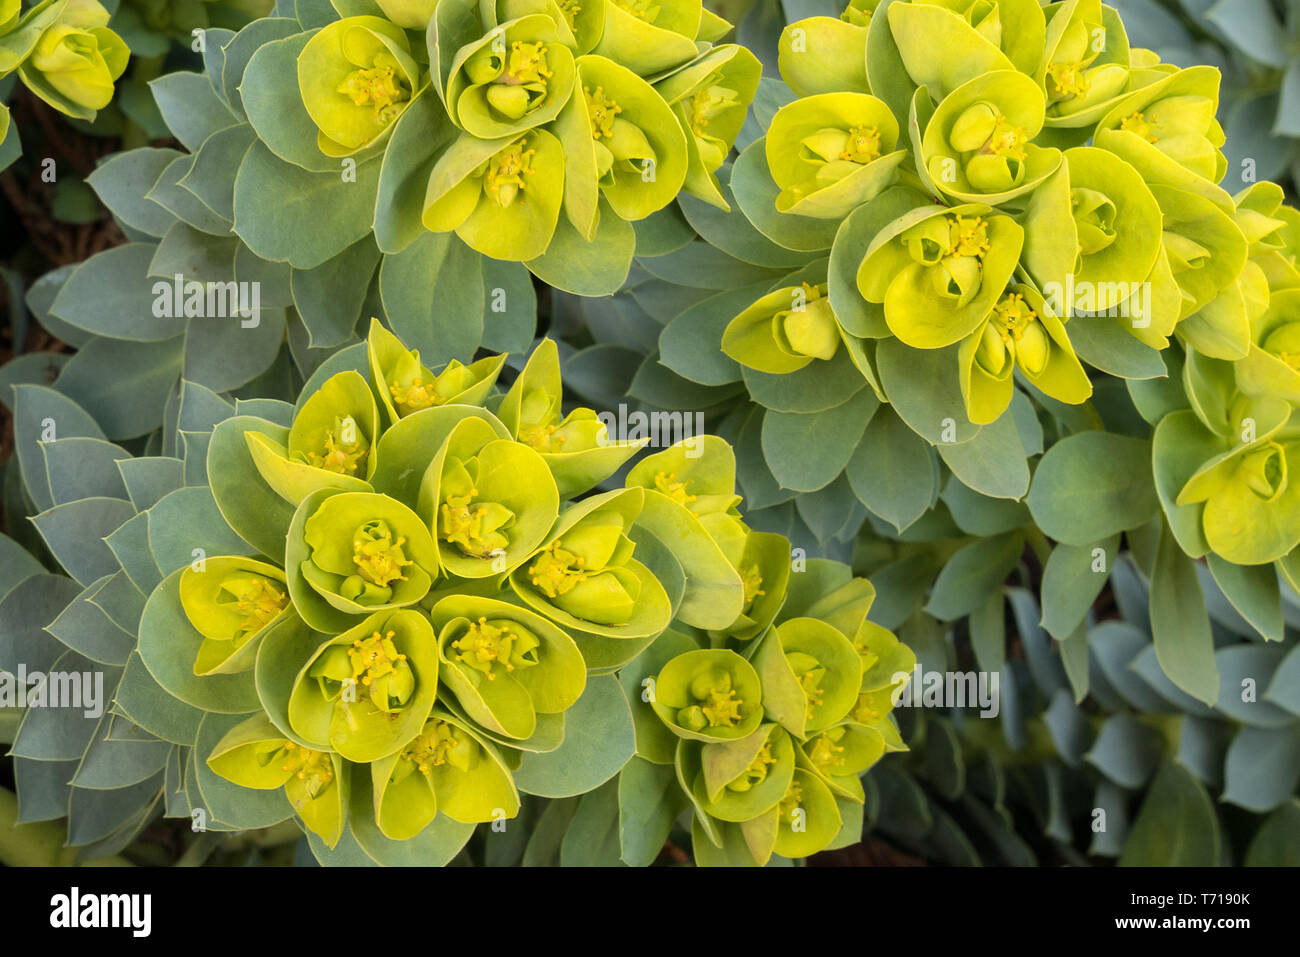 Primer plano de flores y hojas verdes de myrtle spurge, Euphorbia Myrsinites (azul), Aka spurge, amplia-hojas glaucas spurge, o cola de burro expurgo. Foto de stock